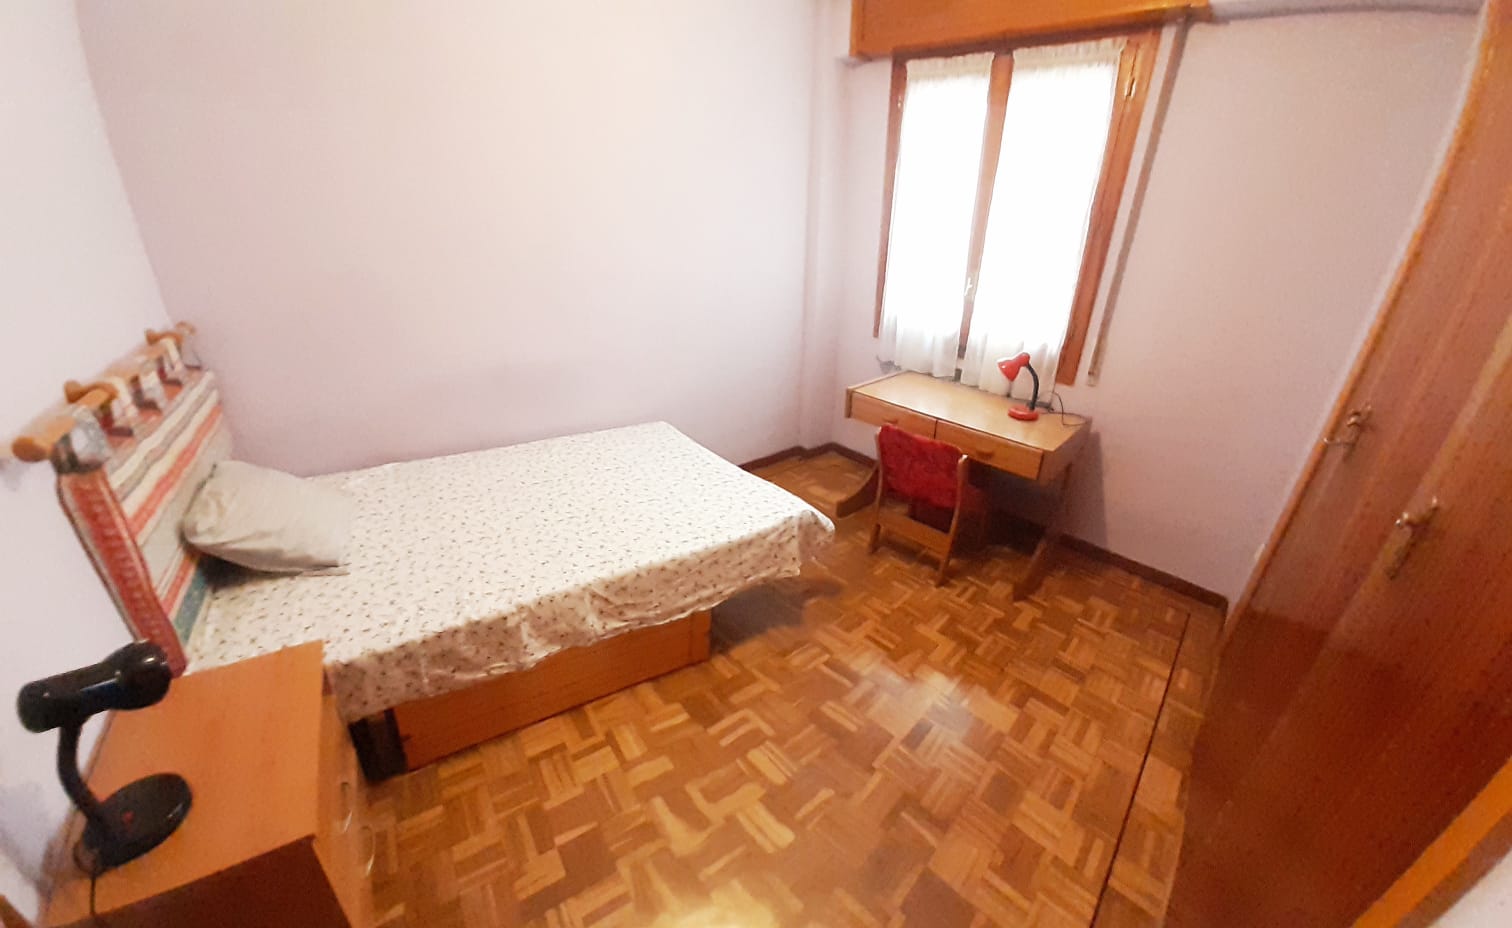 Bedroom in student apartment in Madrid, Spain.